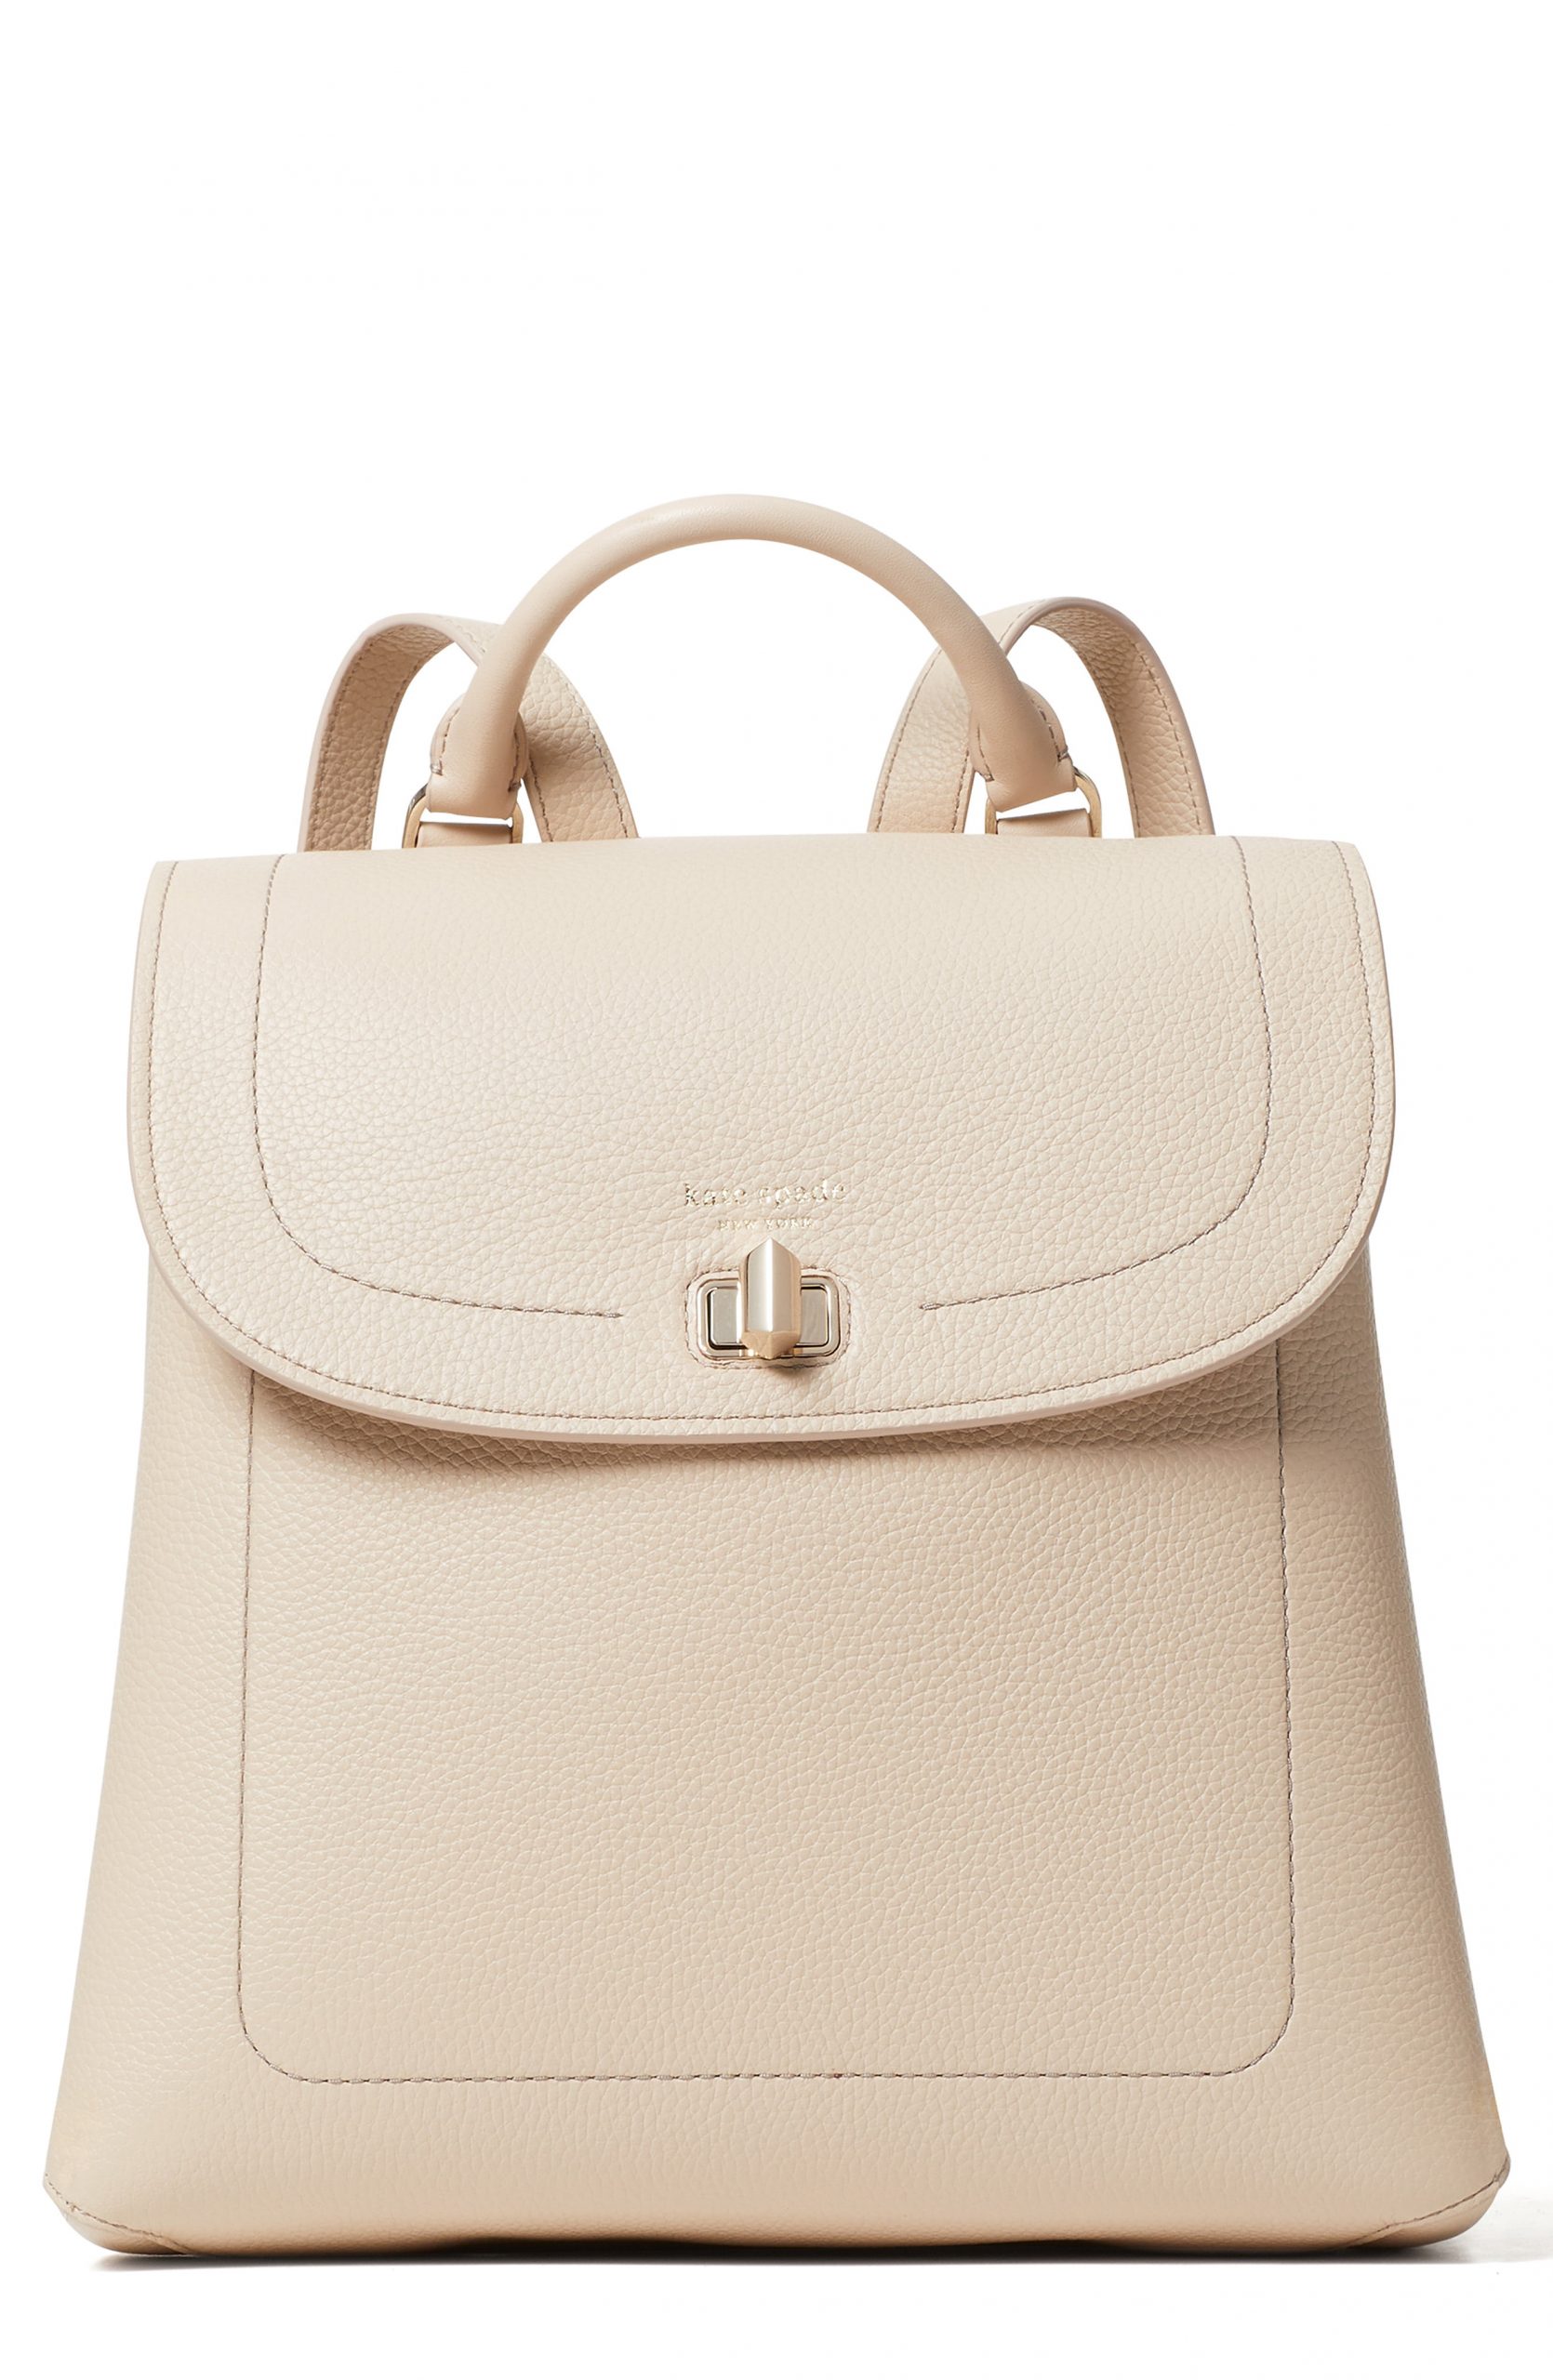 Kate Spade New York Medium Essential Leather Backpack - Beige | Fashion ...